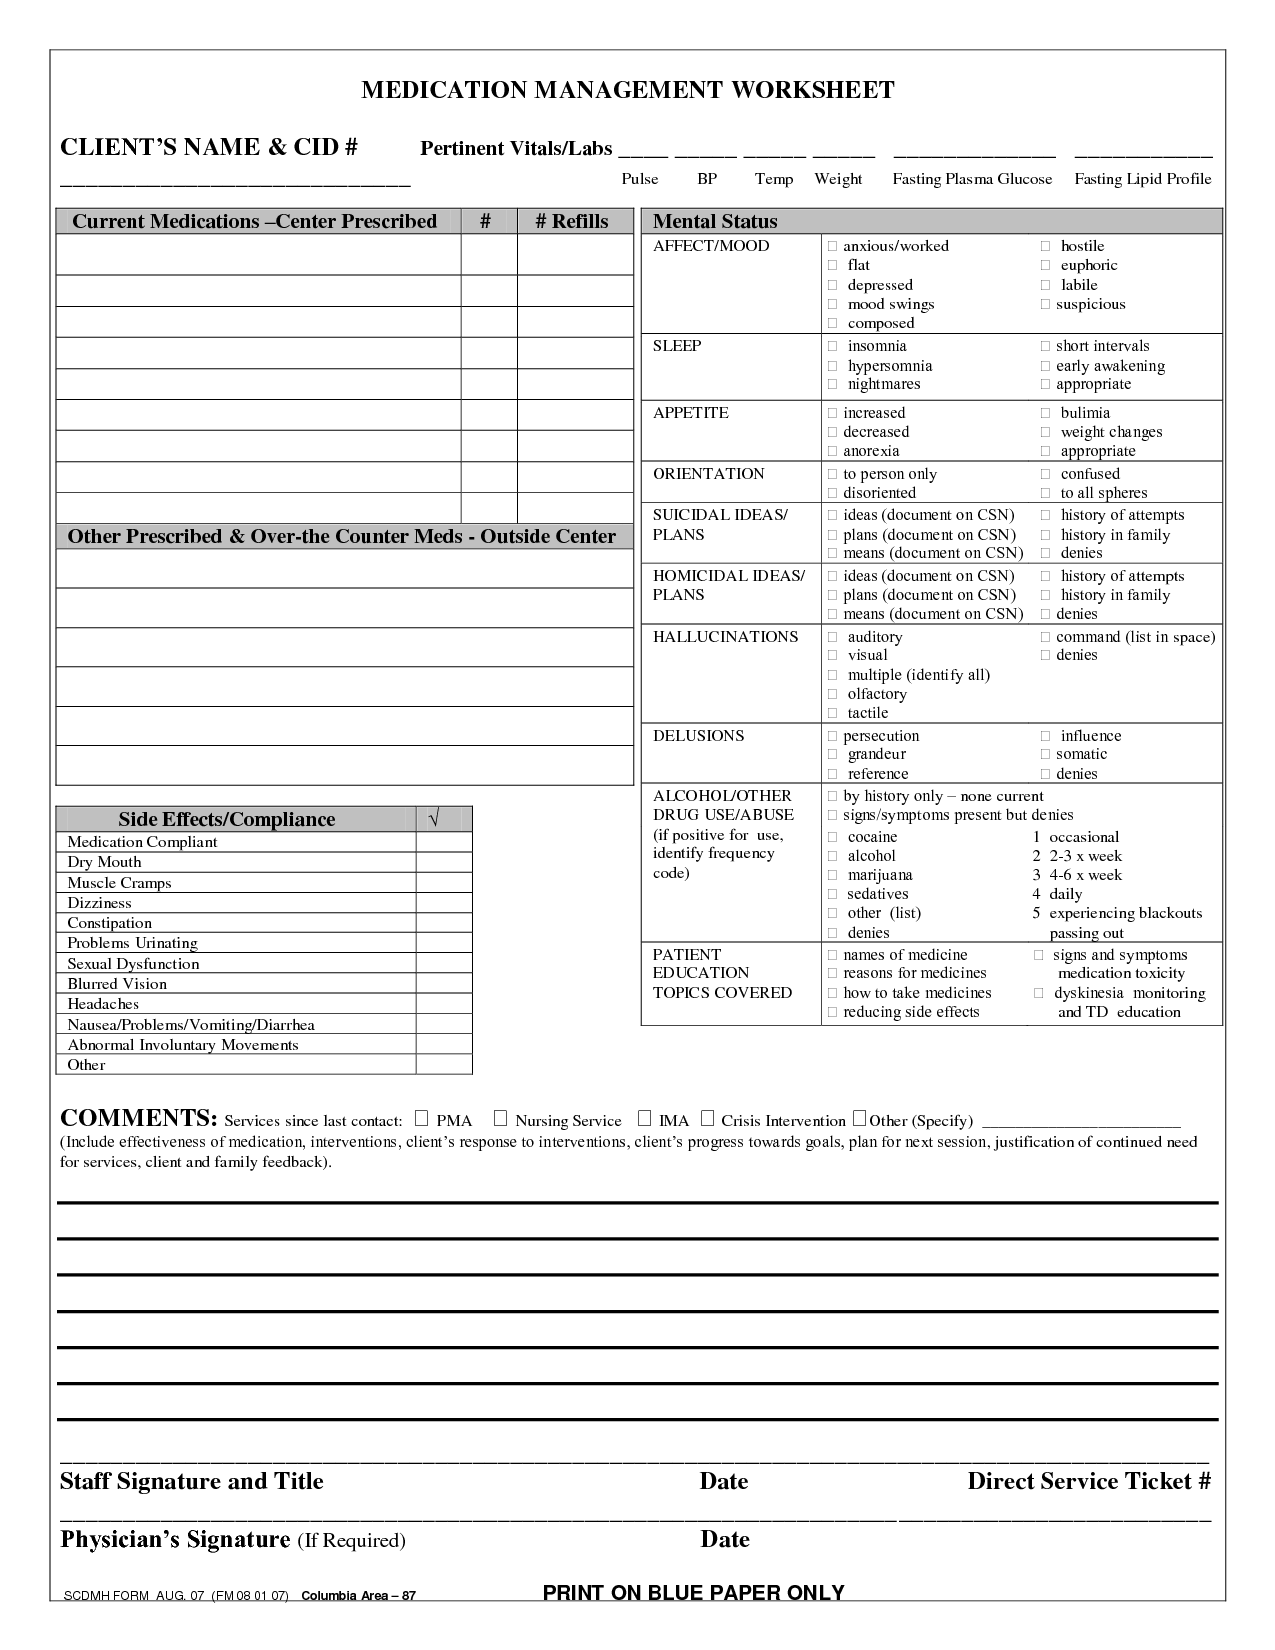 Medication Management Activities Worksheet Image